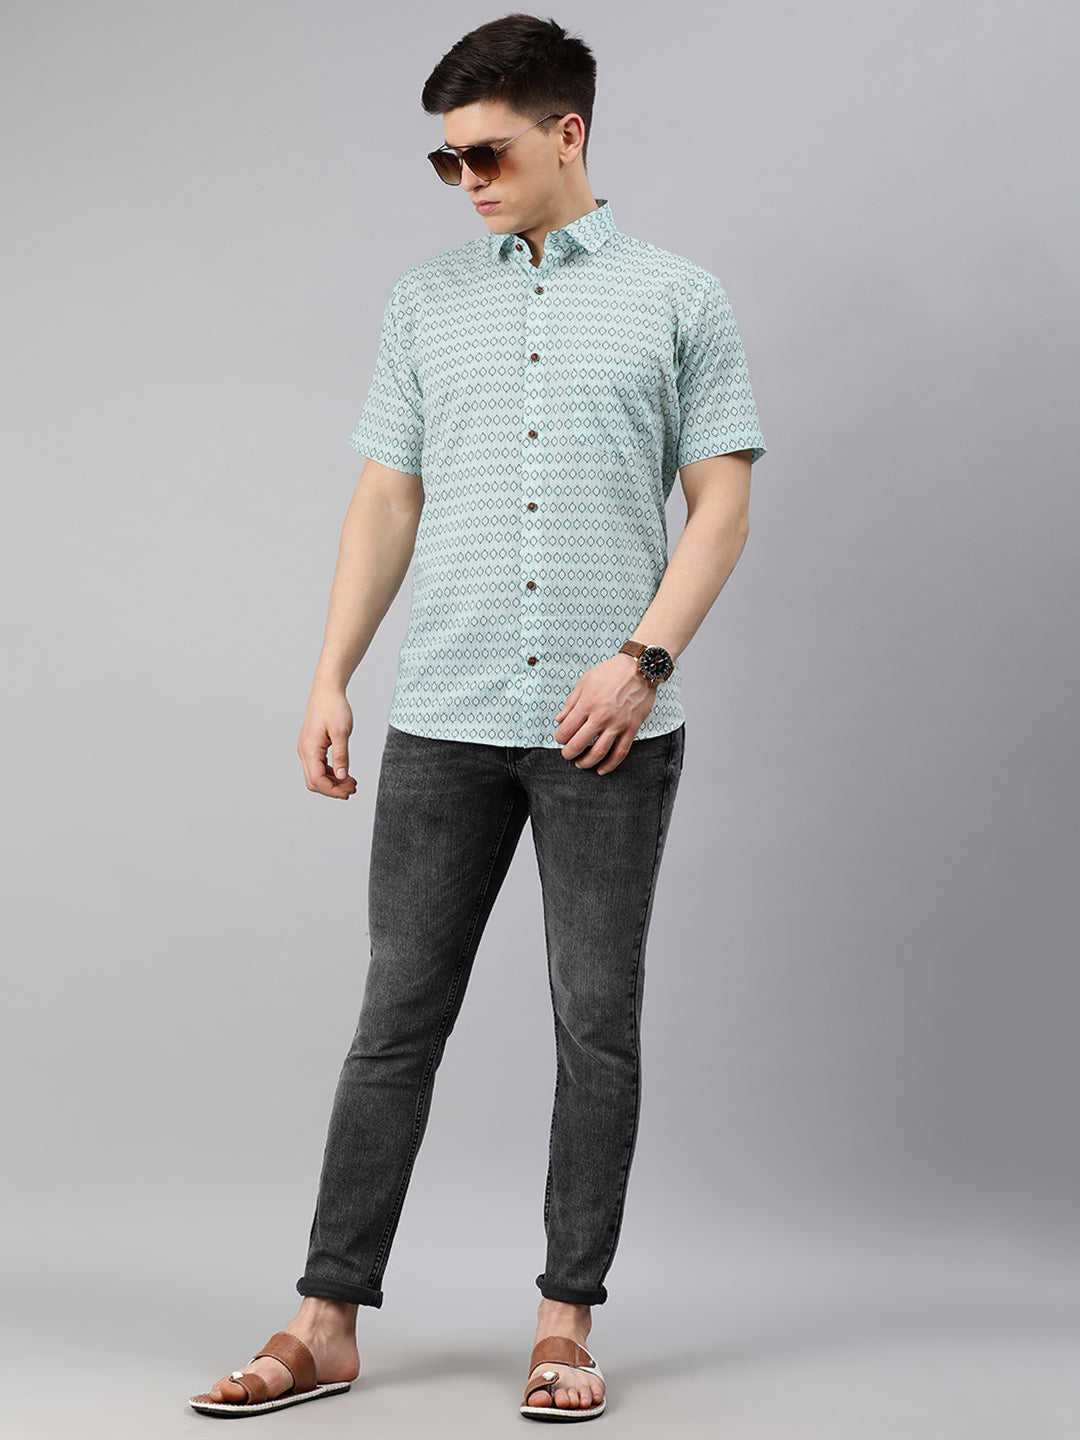 Sea Green Cotton Short Sleeves Shirts For Men-MMH046 - NOZ2TOZ